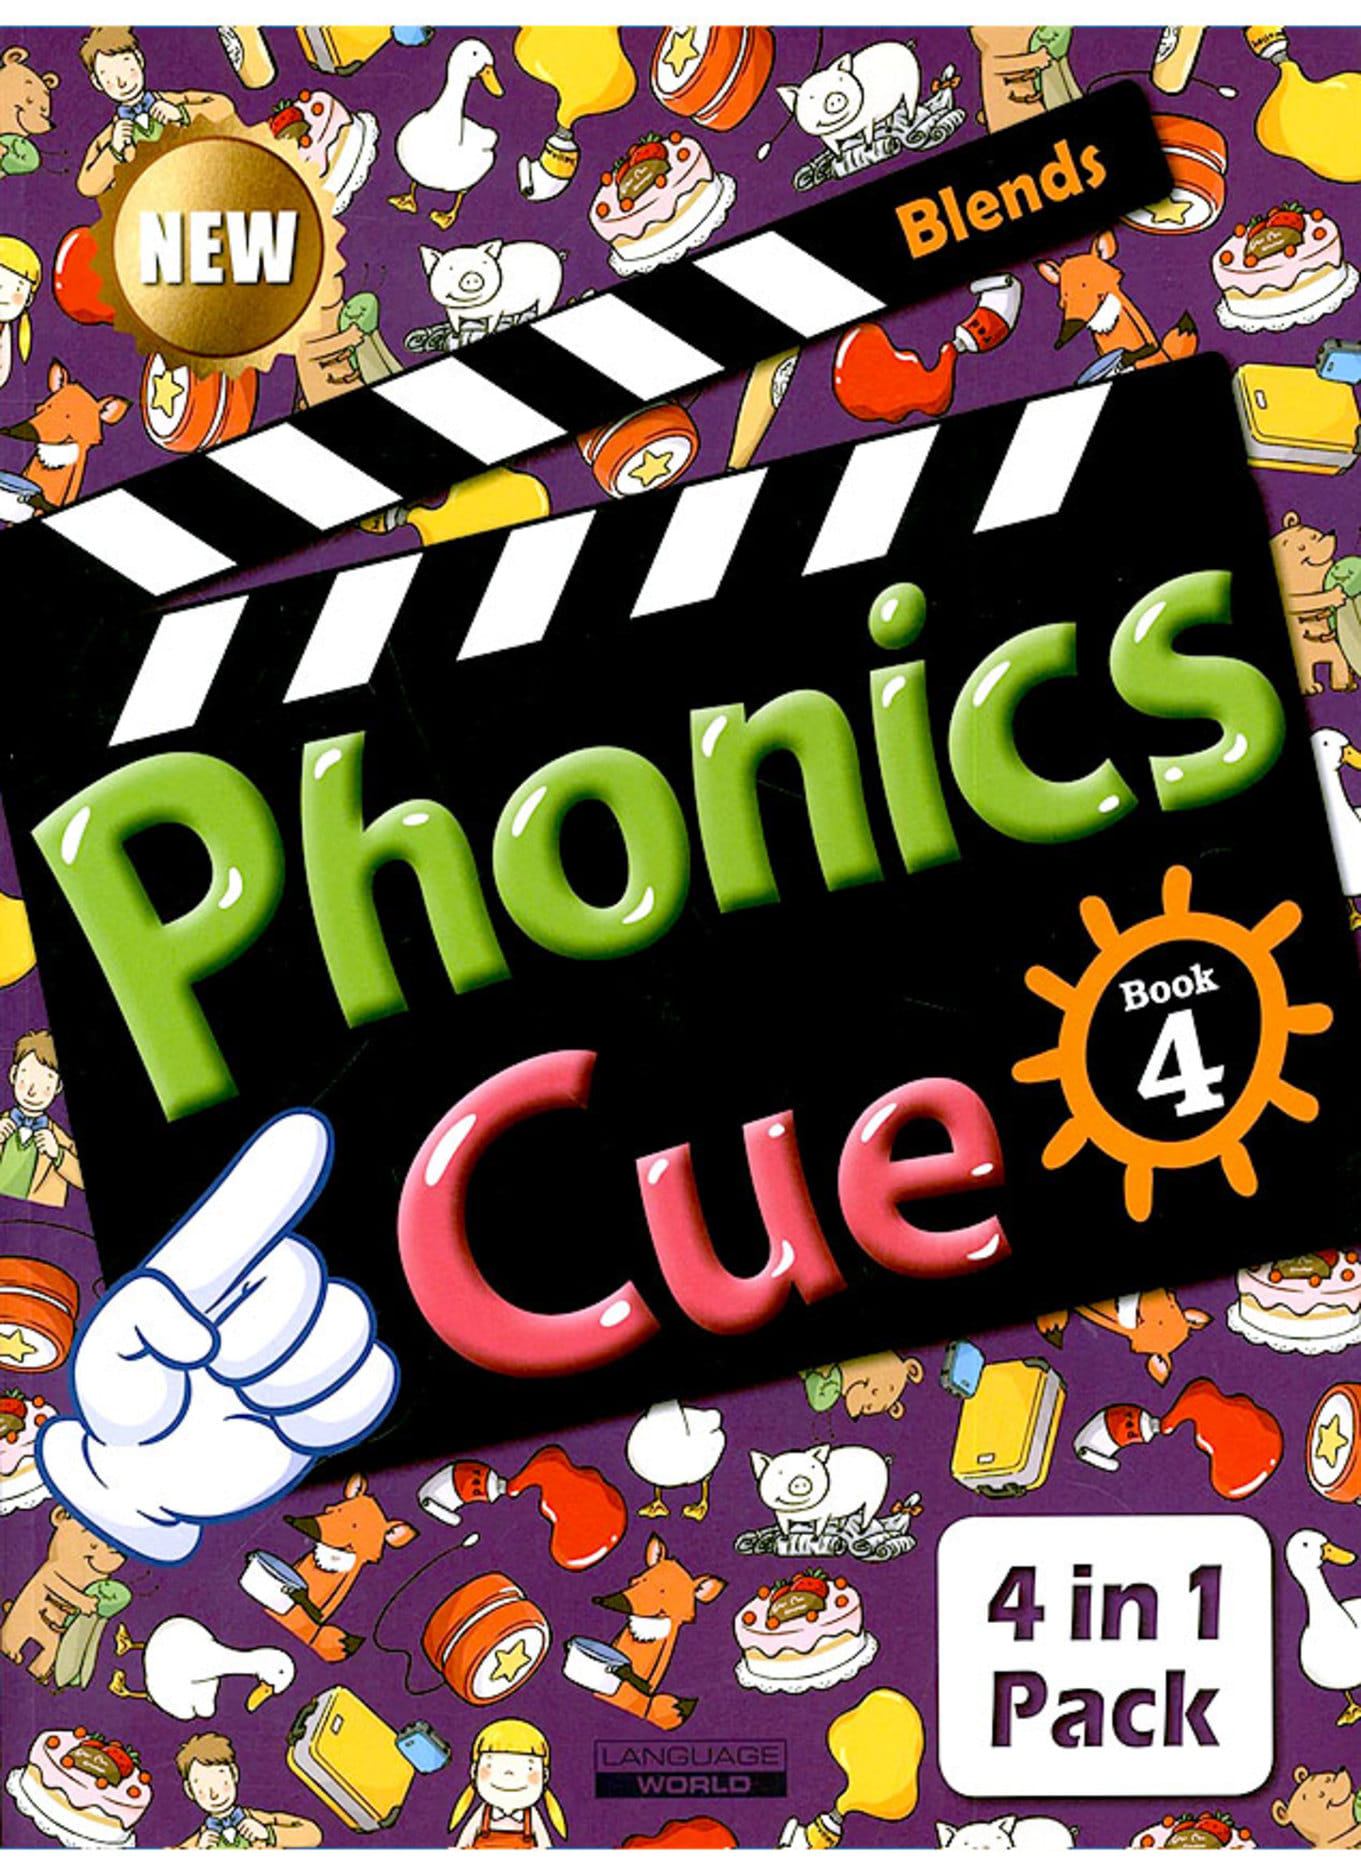 [Language World] Phonics Cue 1~4 Set (2E)